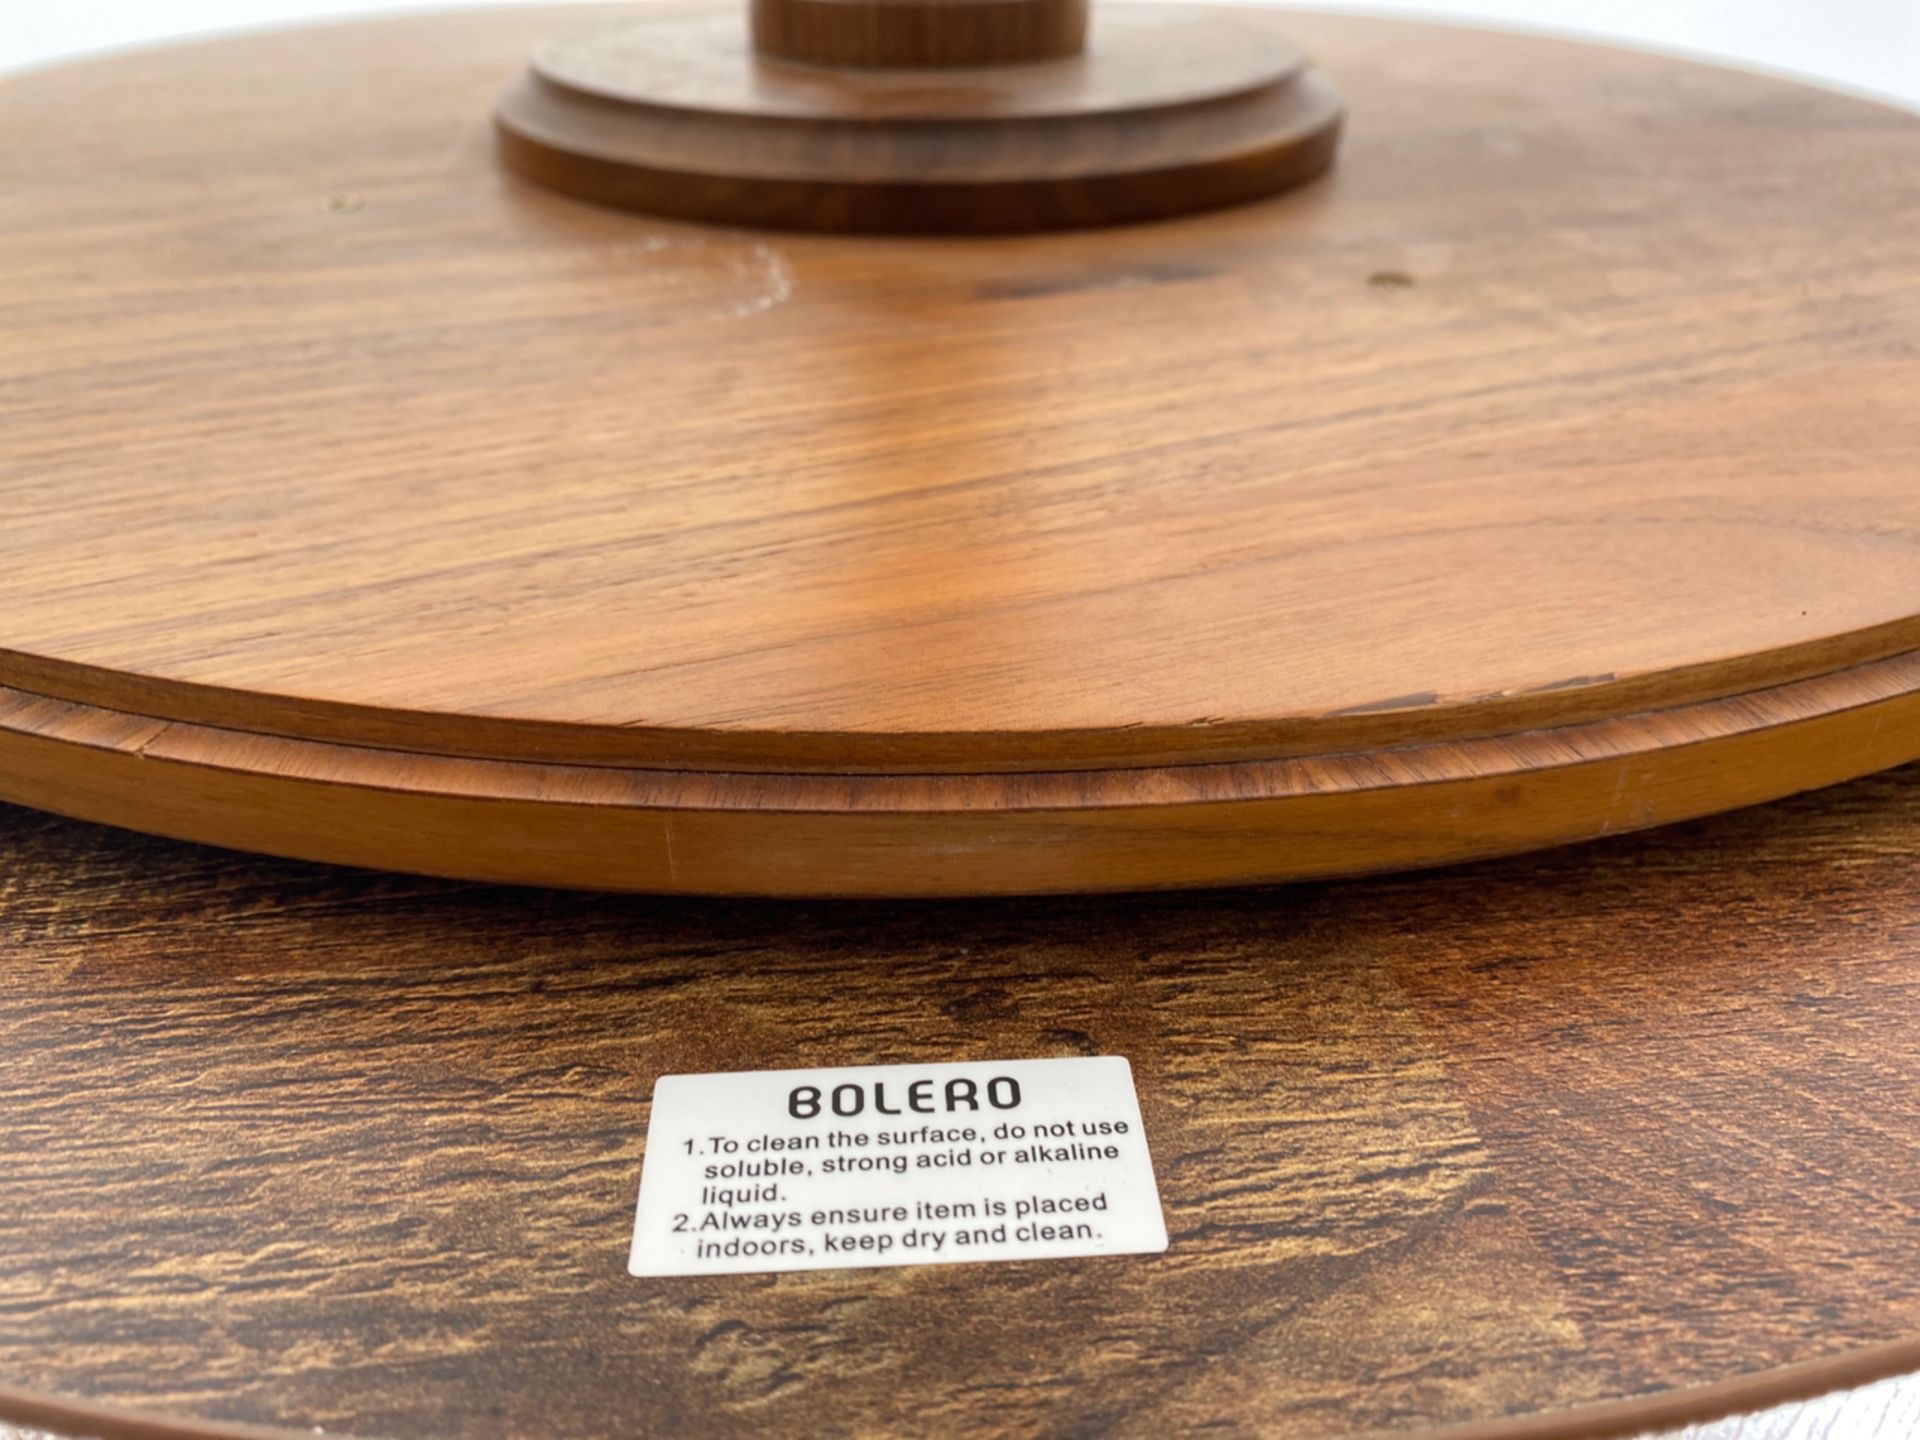 Bolero Walnut Pedestal Table - Image 4 of 4